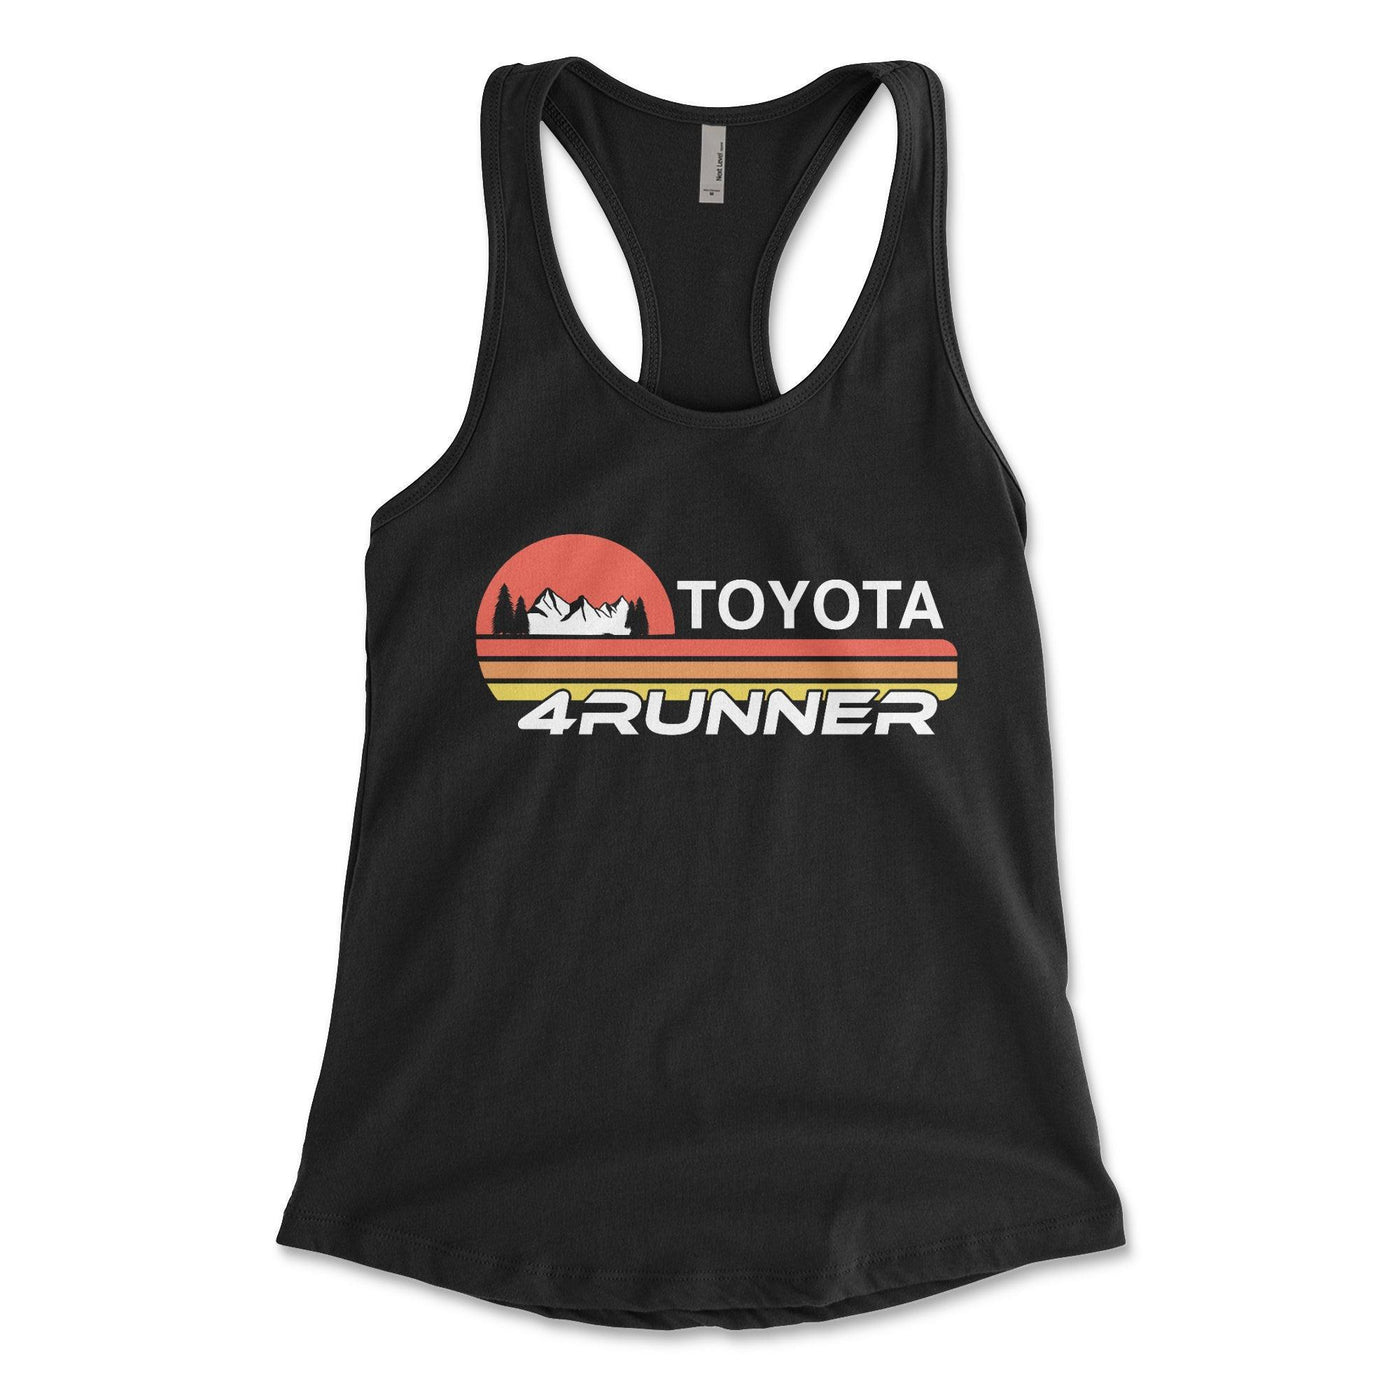 Toyota 4Runner Racerback Tank Top - Goats Trail